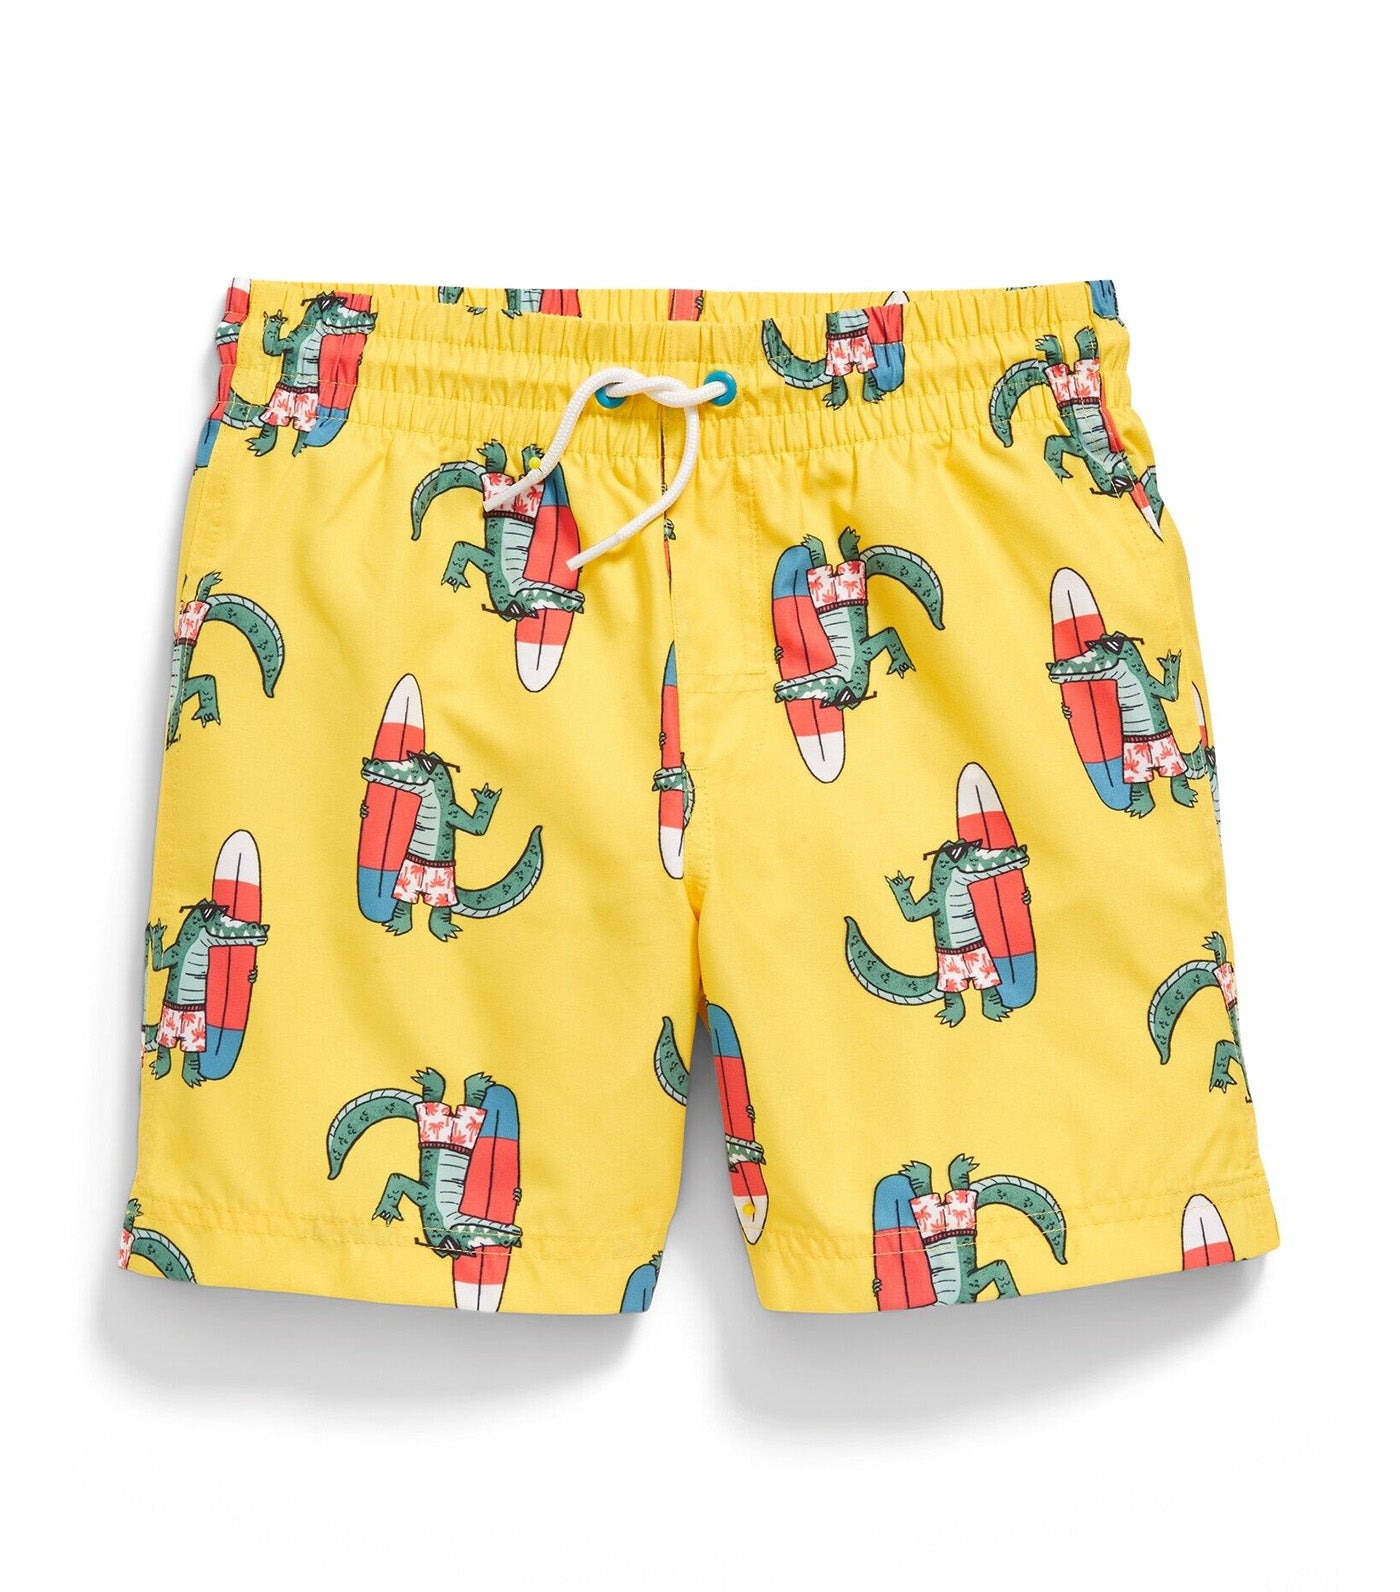 Printed Swim Trunks for Boys - Alligator